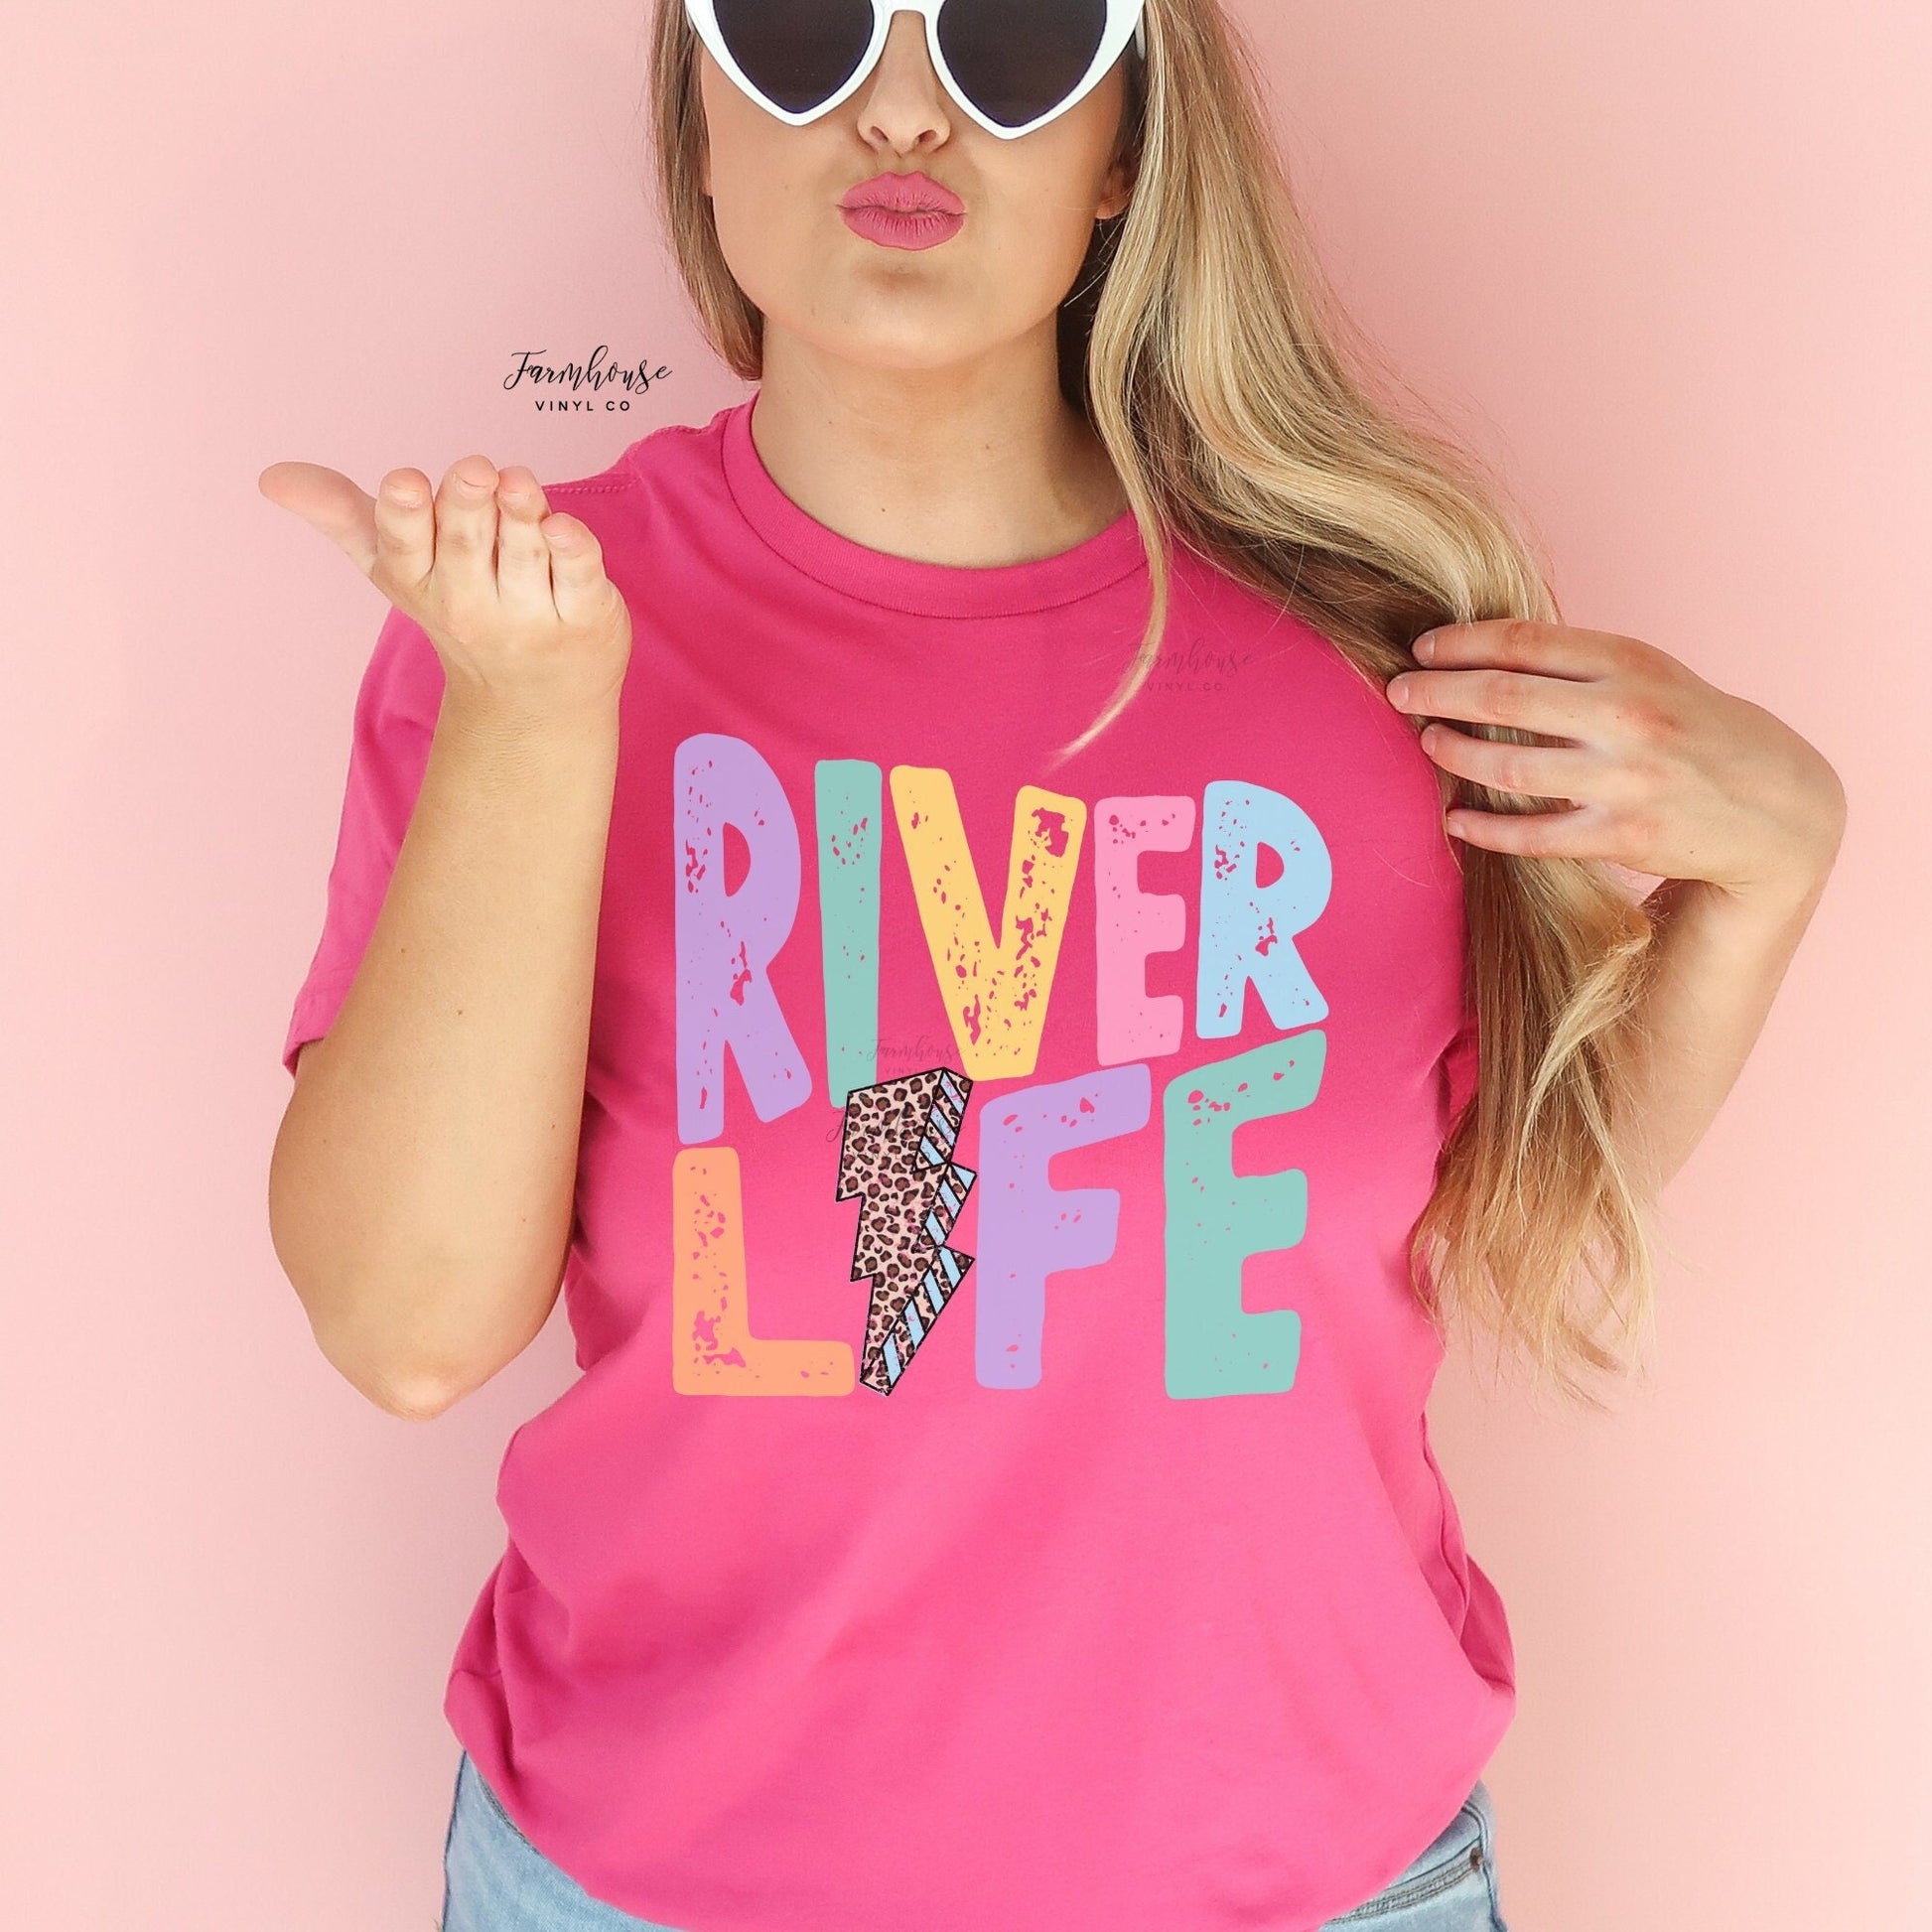 River Life Shirt - Farmhouse Vinyl Co